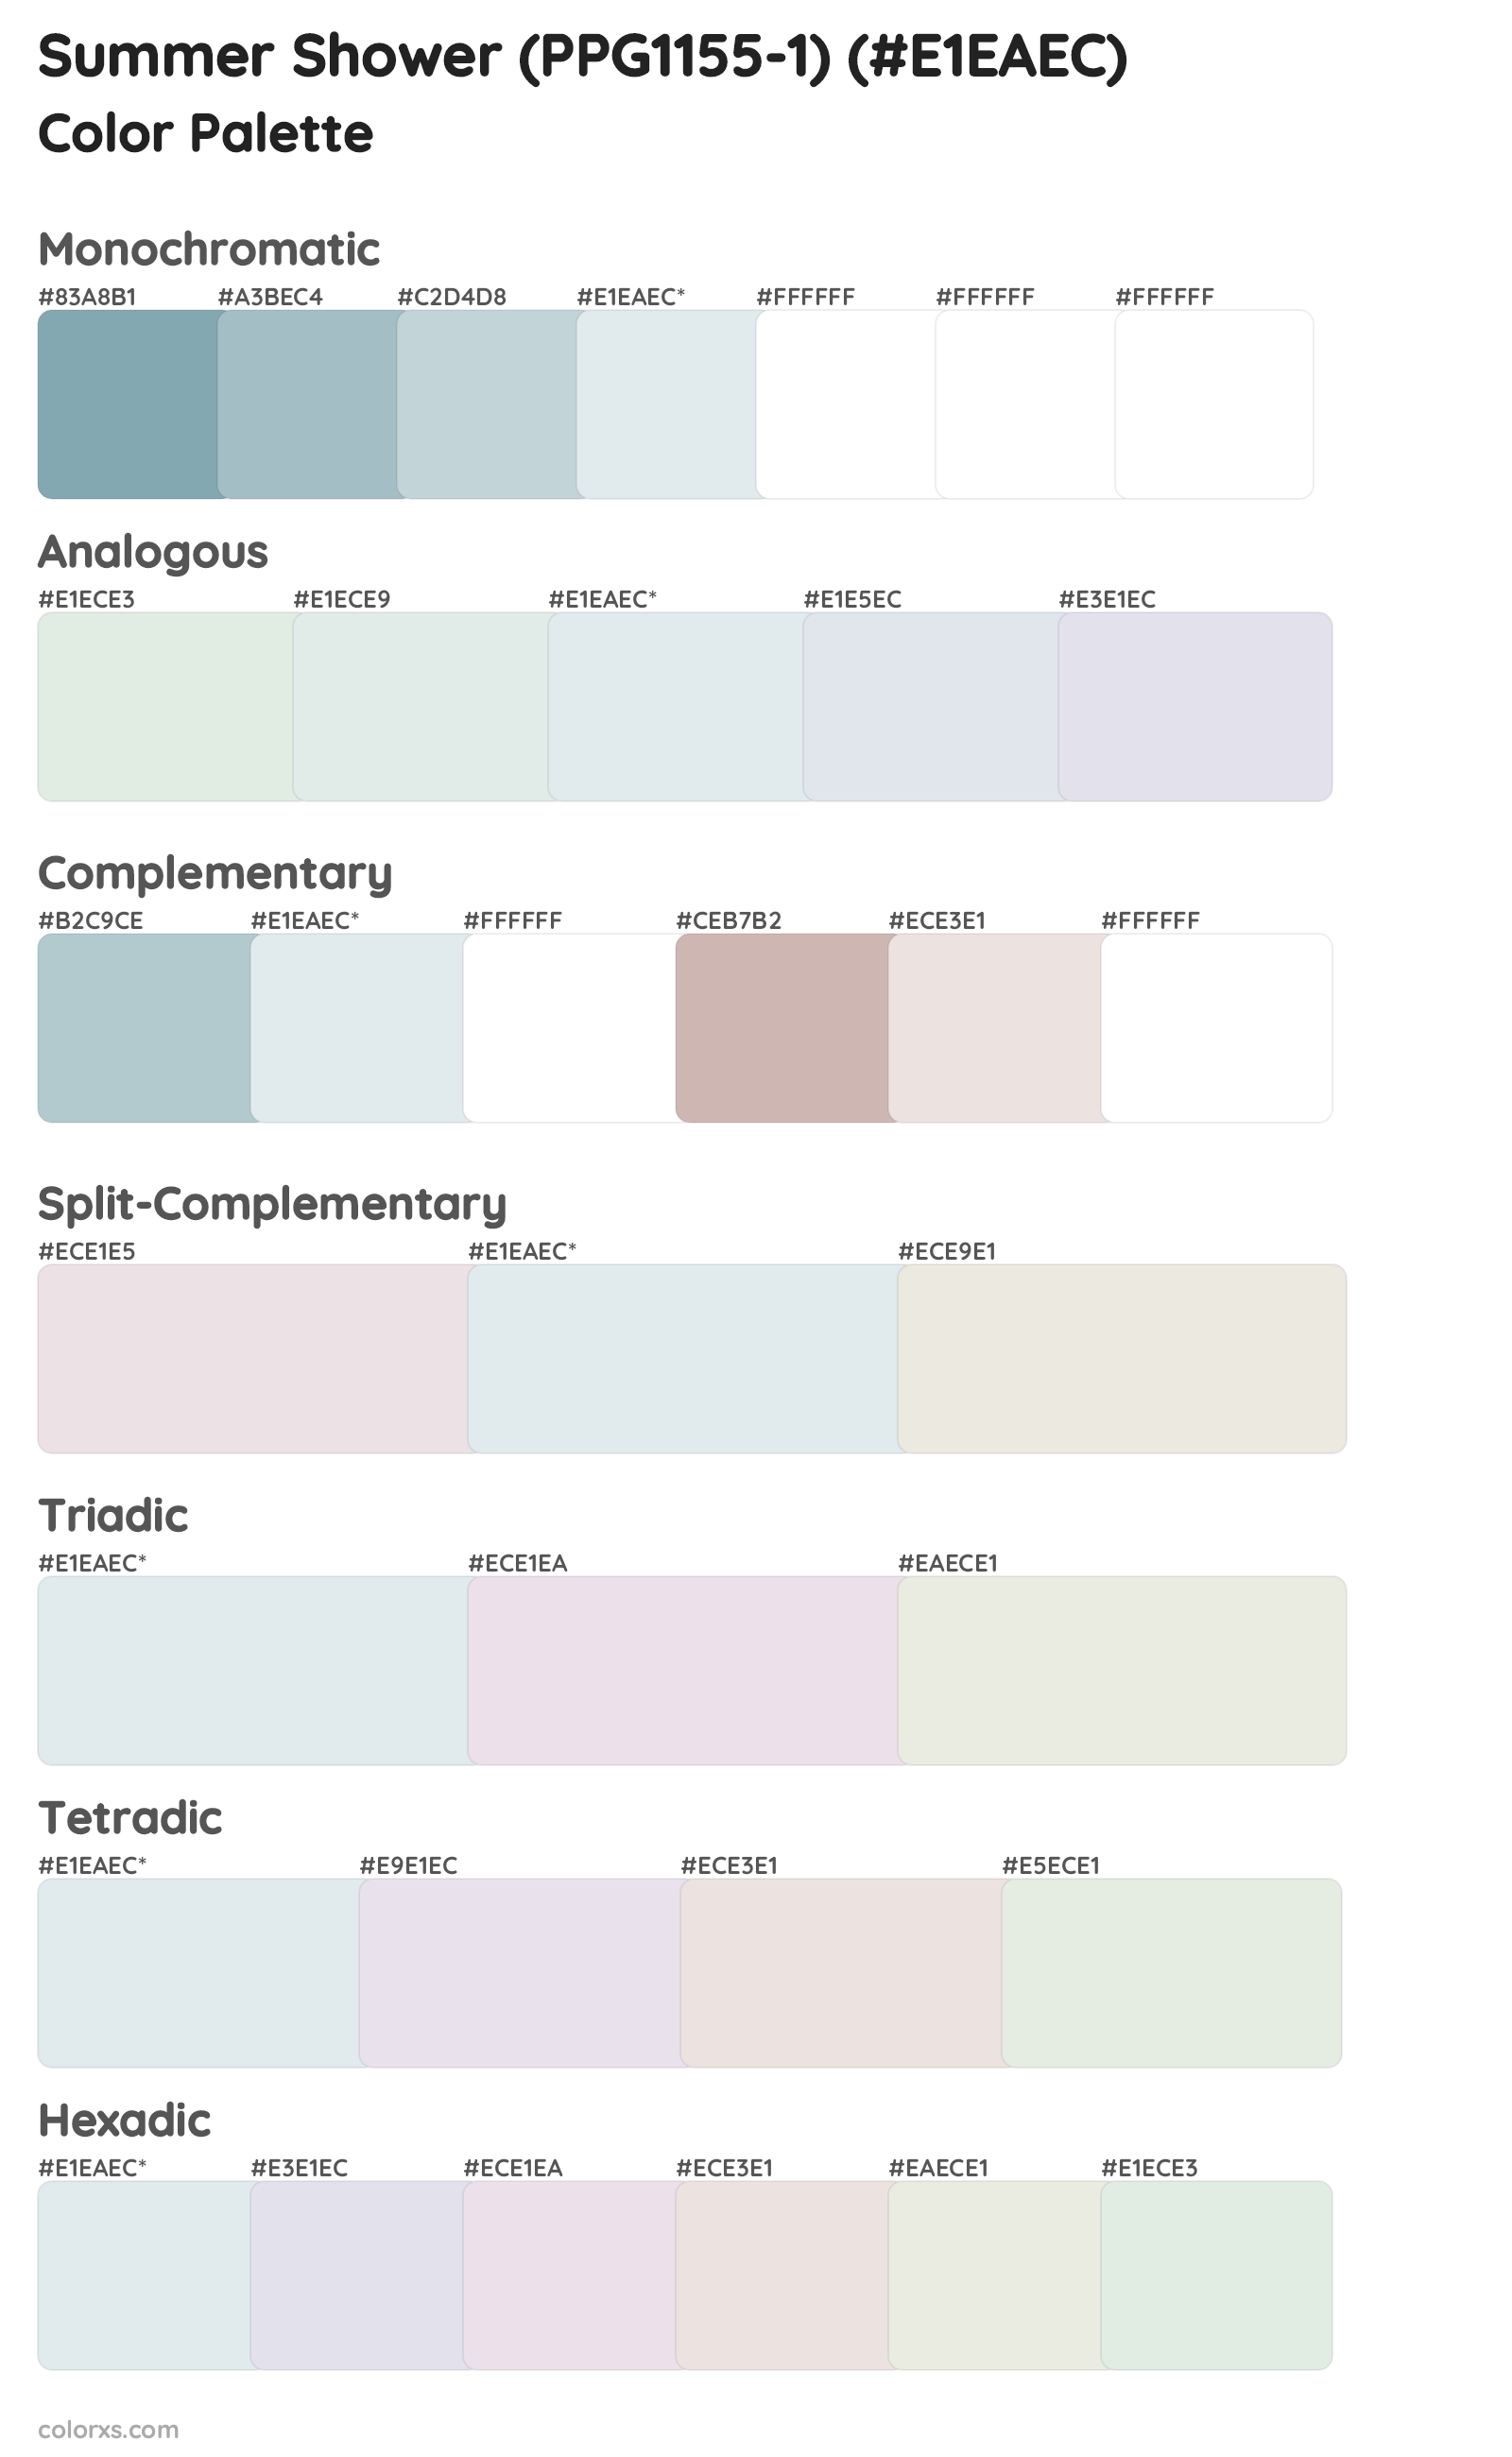 Summer Shower (PPG1155-1) Color Scheme Palettes